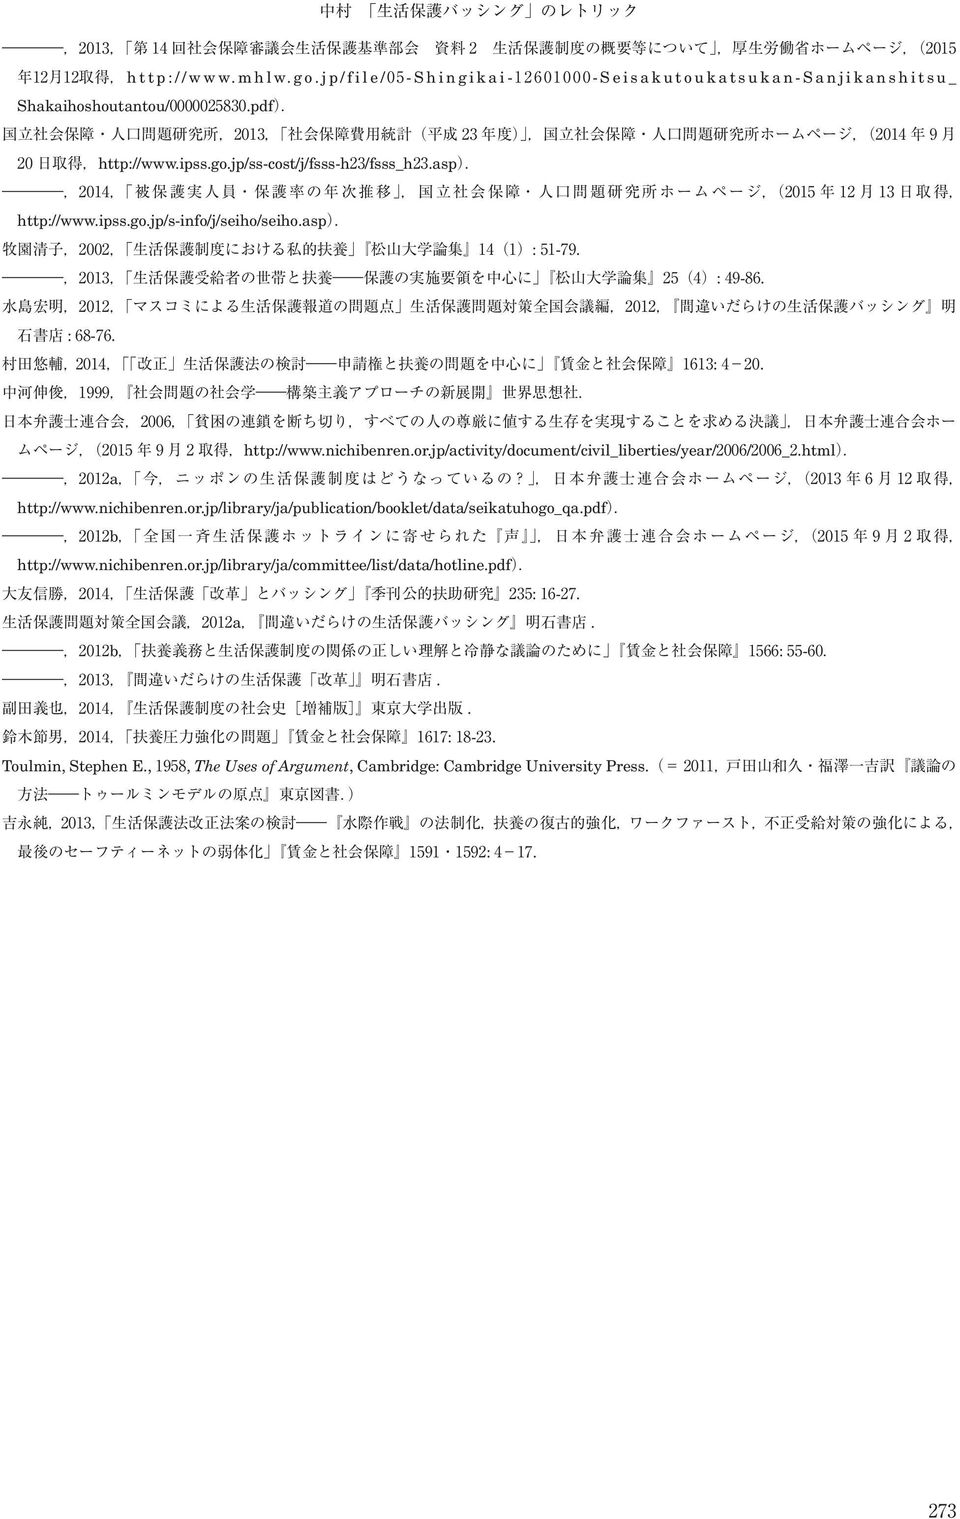 jp/activity/document/civil_liberties/year/ / _.html a http://www.nichibenren.or.jp/library/ja/publication/booklet/data/seikatuhogo_qa.